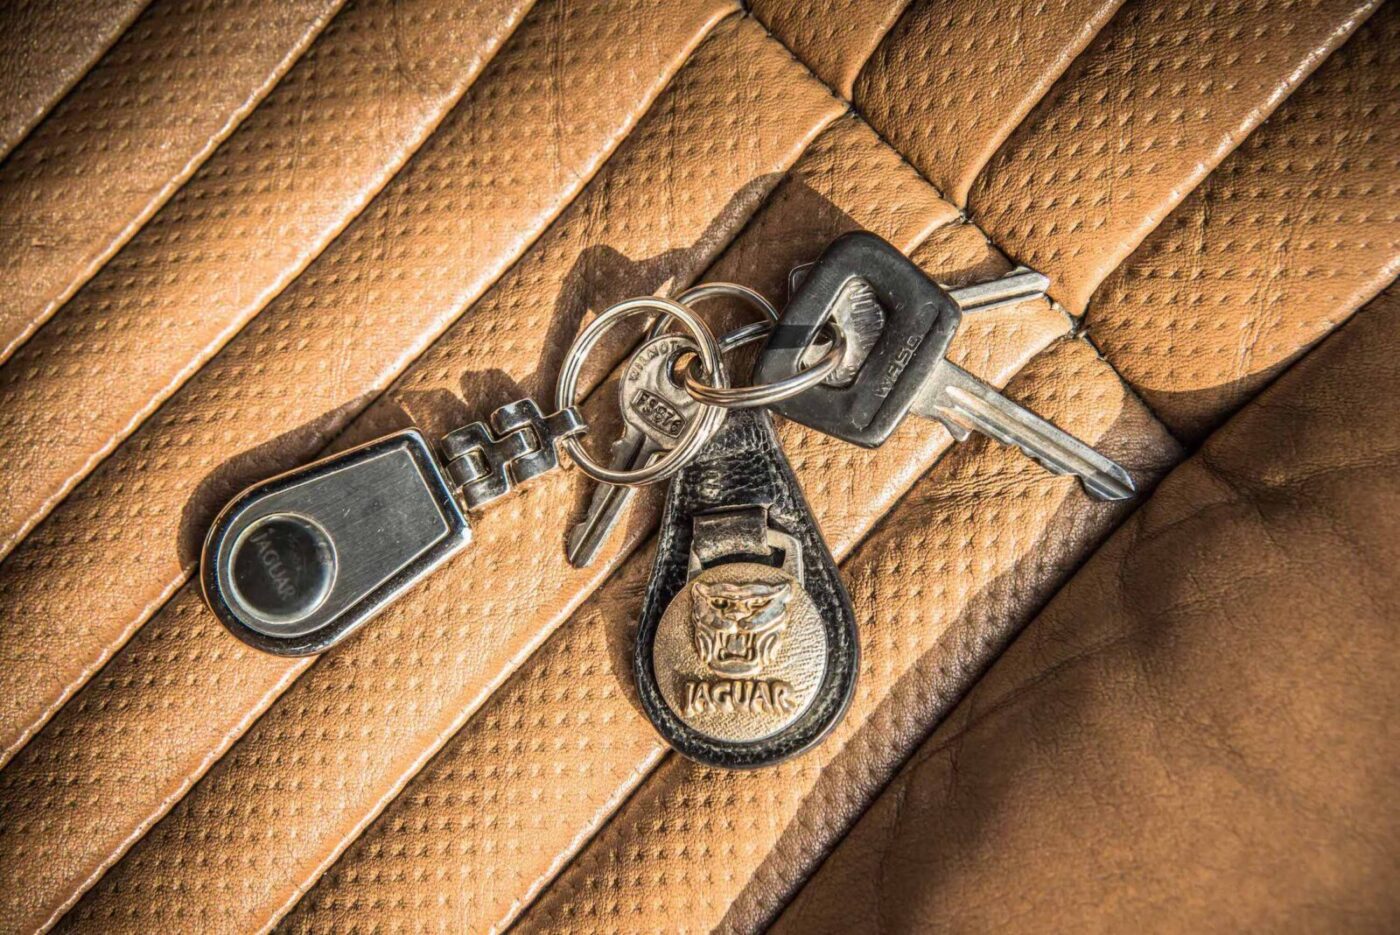 Jaguar XJ6 keys leather seat